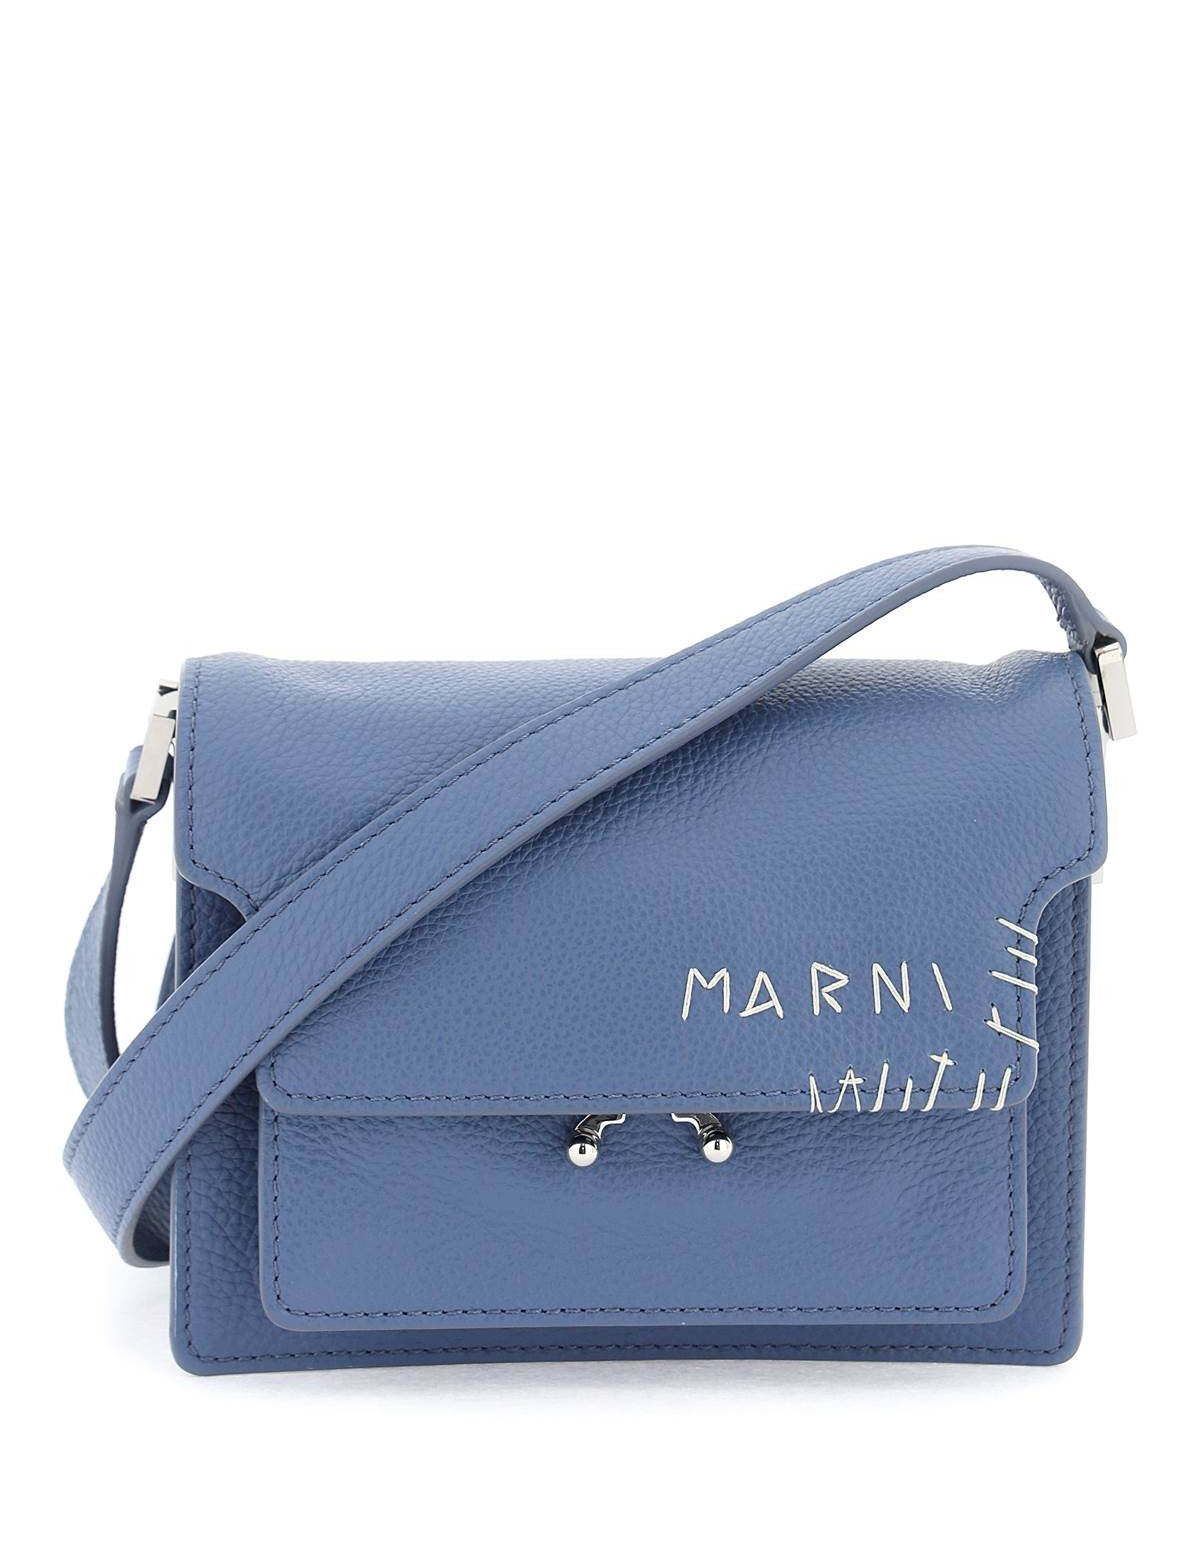 marni-mini-soft-trunk-shoulder-bag_c986ff60-65aa-4505-ad37-d99f24a064cb.jpg